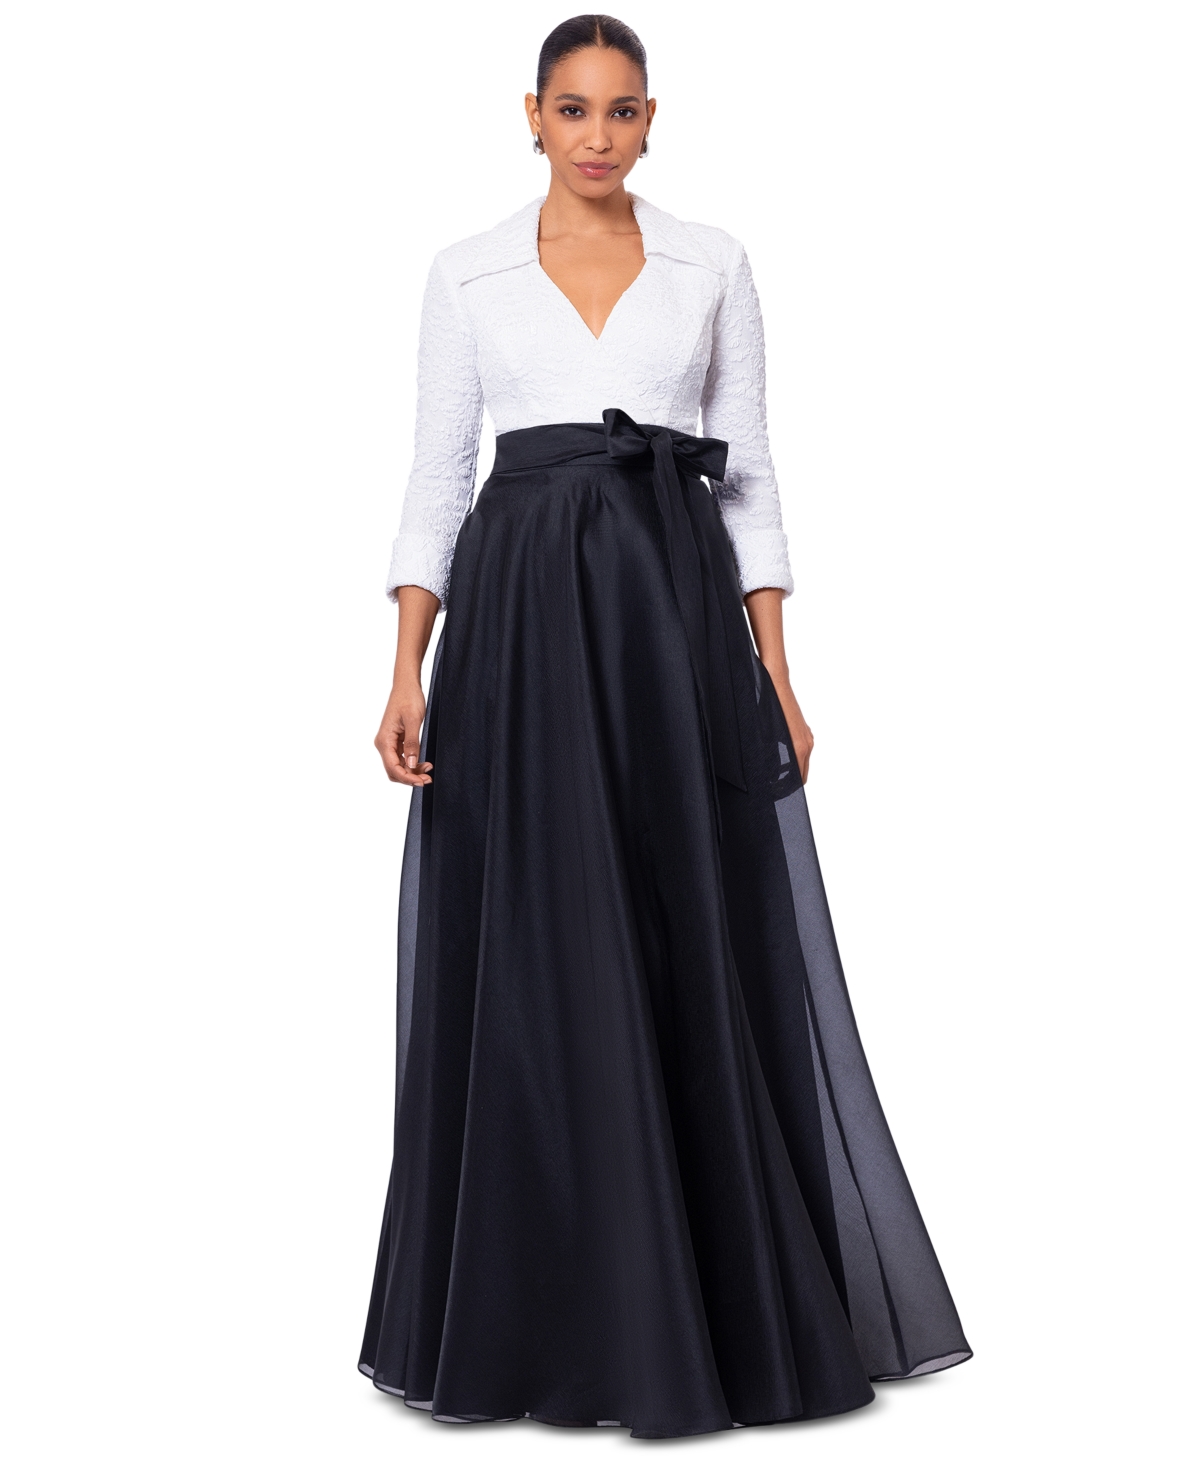 Women's Jacquard Ball Gown - Black/White